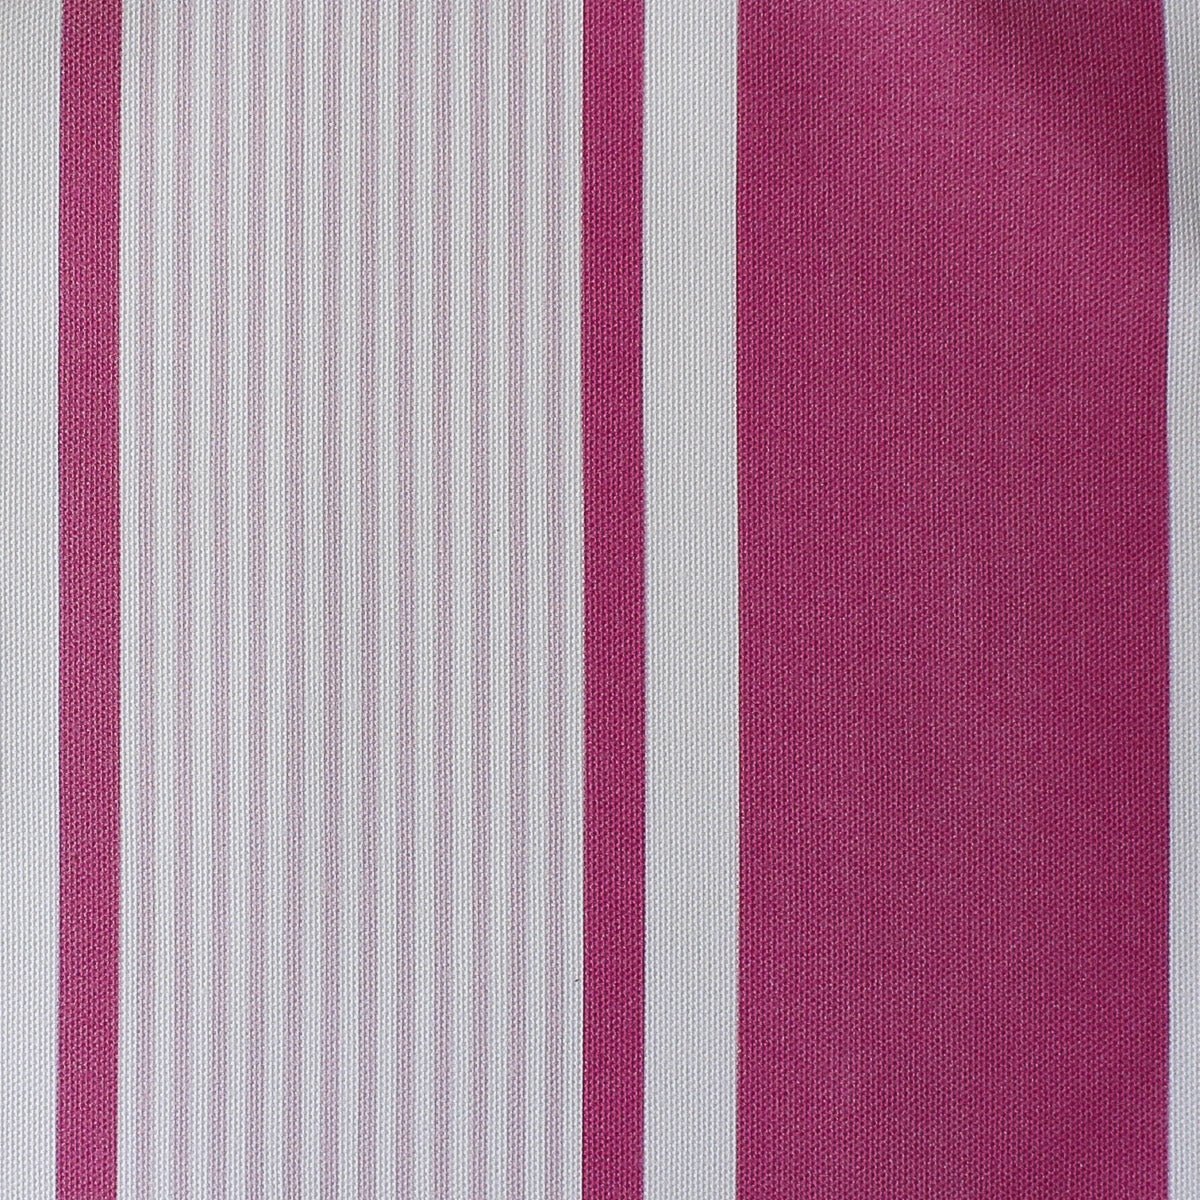 Deckchair Stripe Multi Fabric - Raspberry-Peony - Hydrangea Lane Home